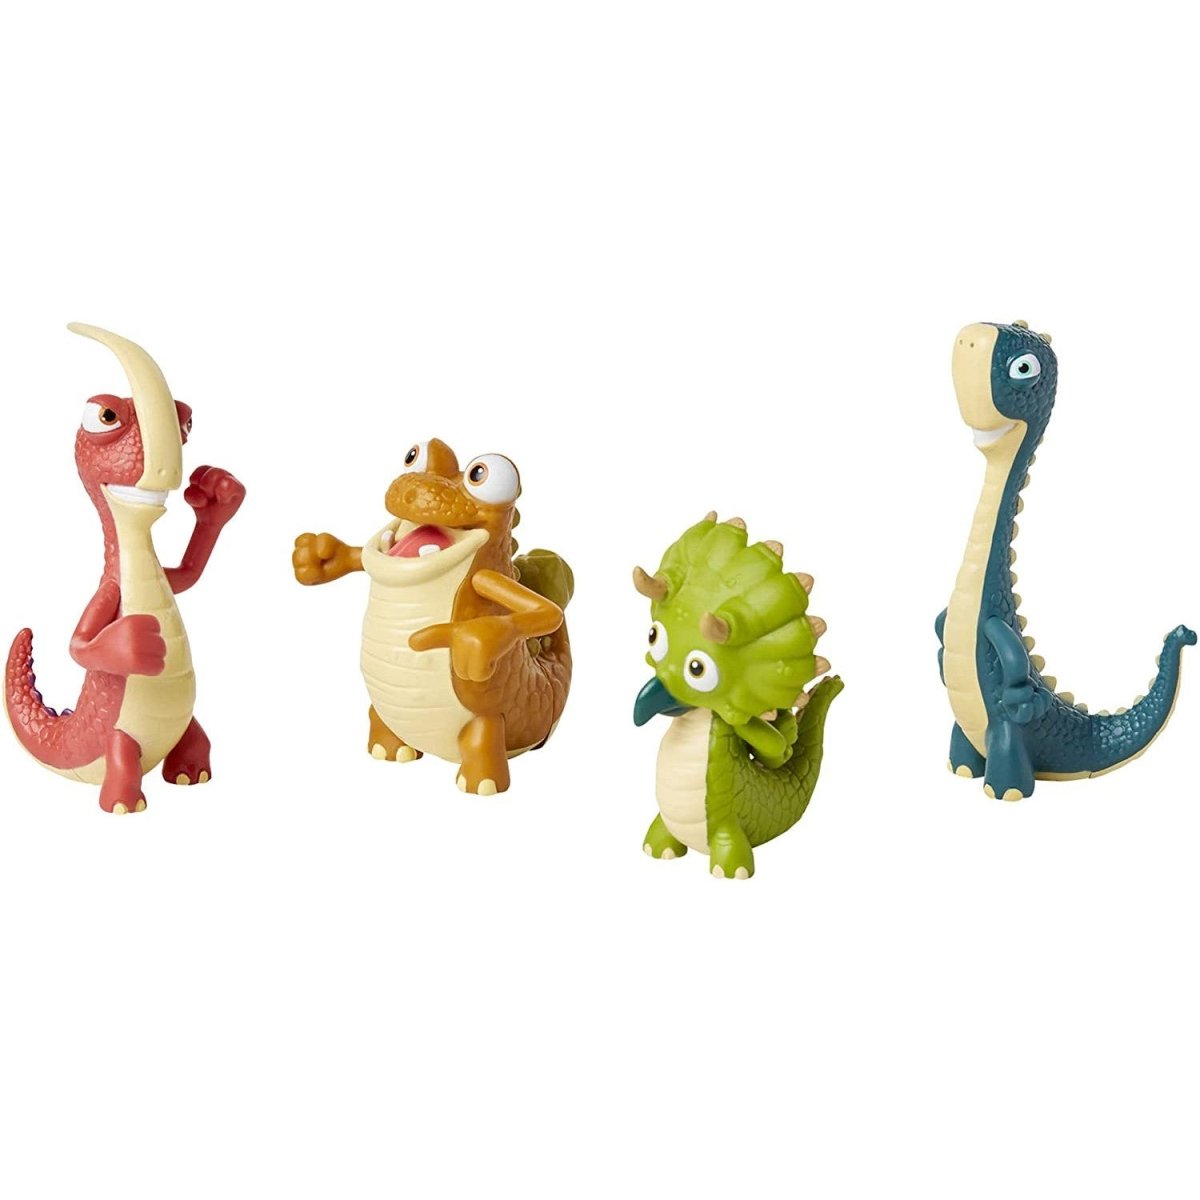 Gigantosaurus Dino Friends 4 Pack – McGreevy's Toys Direct